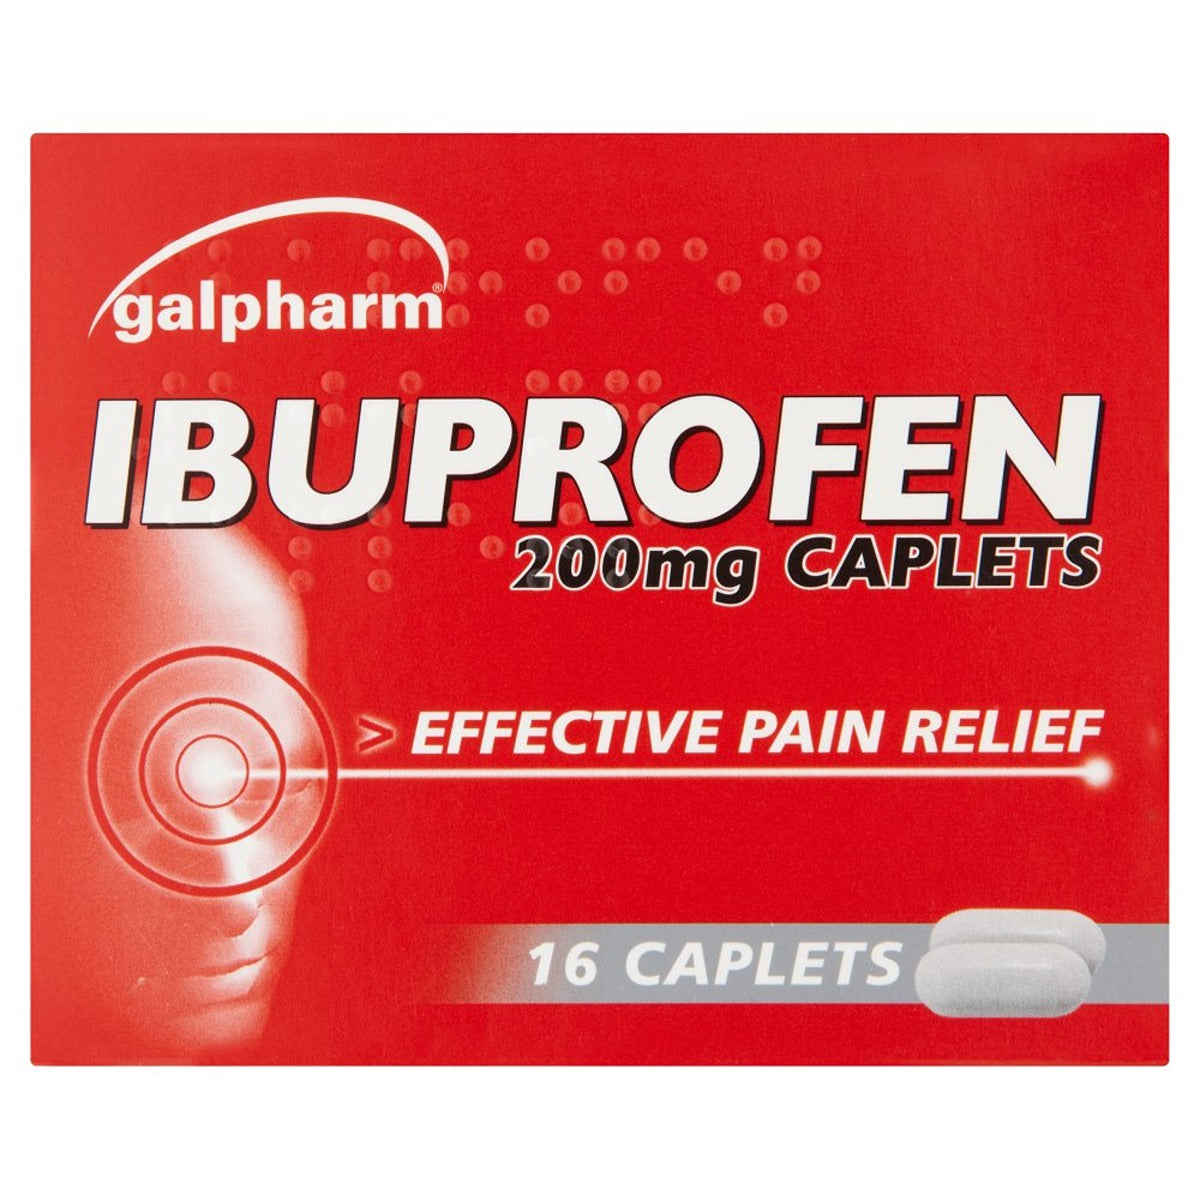 Galpharm - Ibuprofen 200mg Caplets - 16 Caplets - Continental Food Store